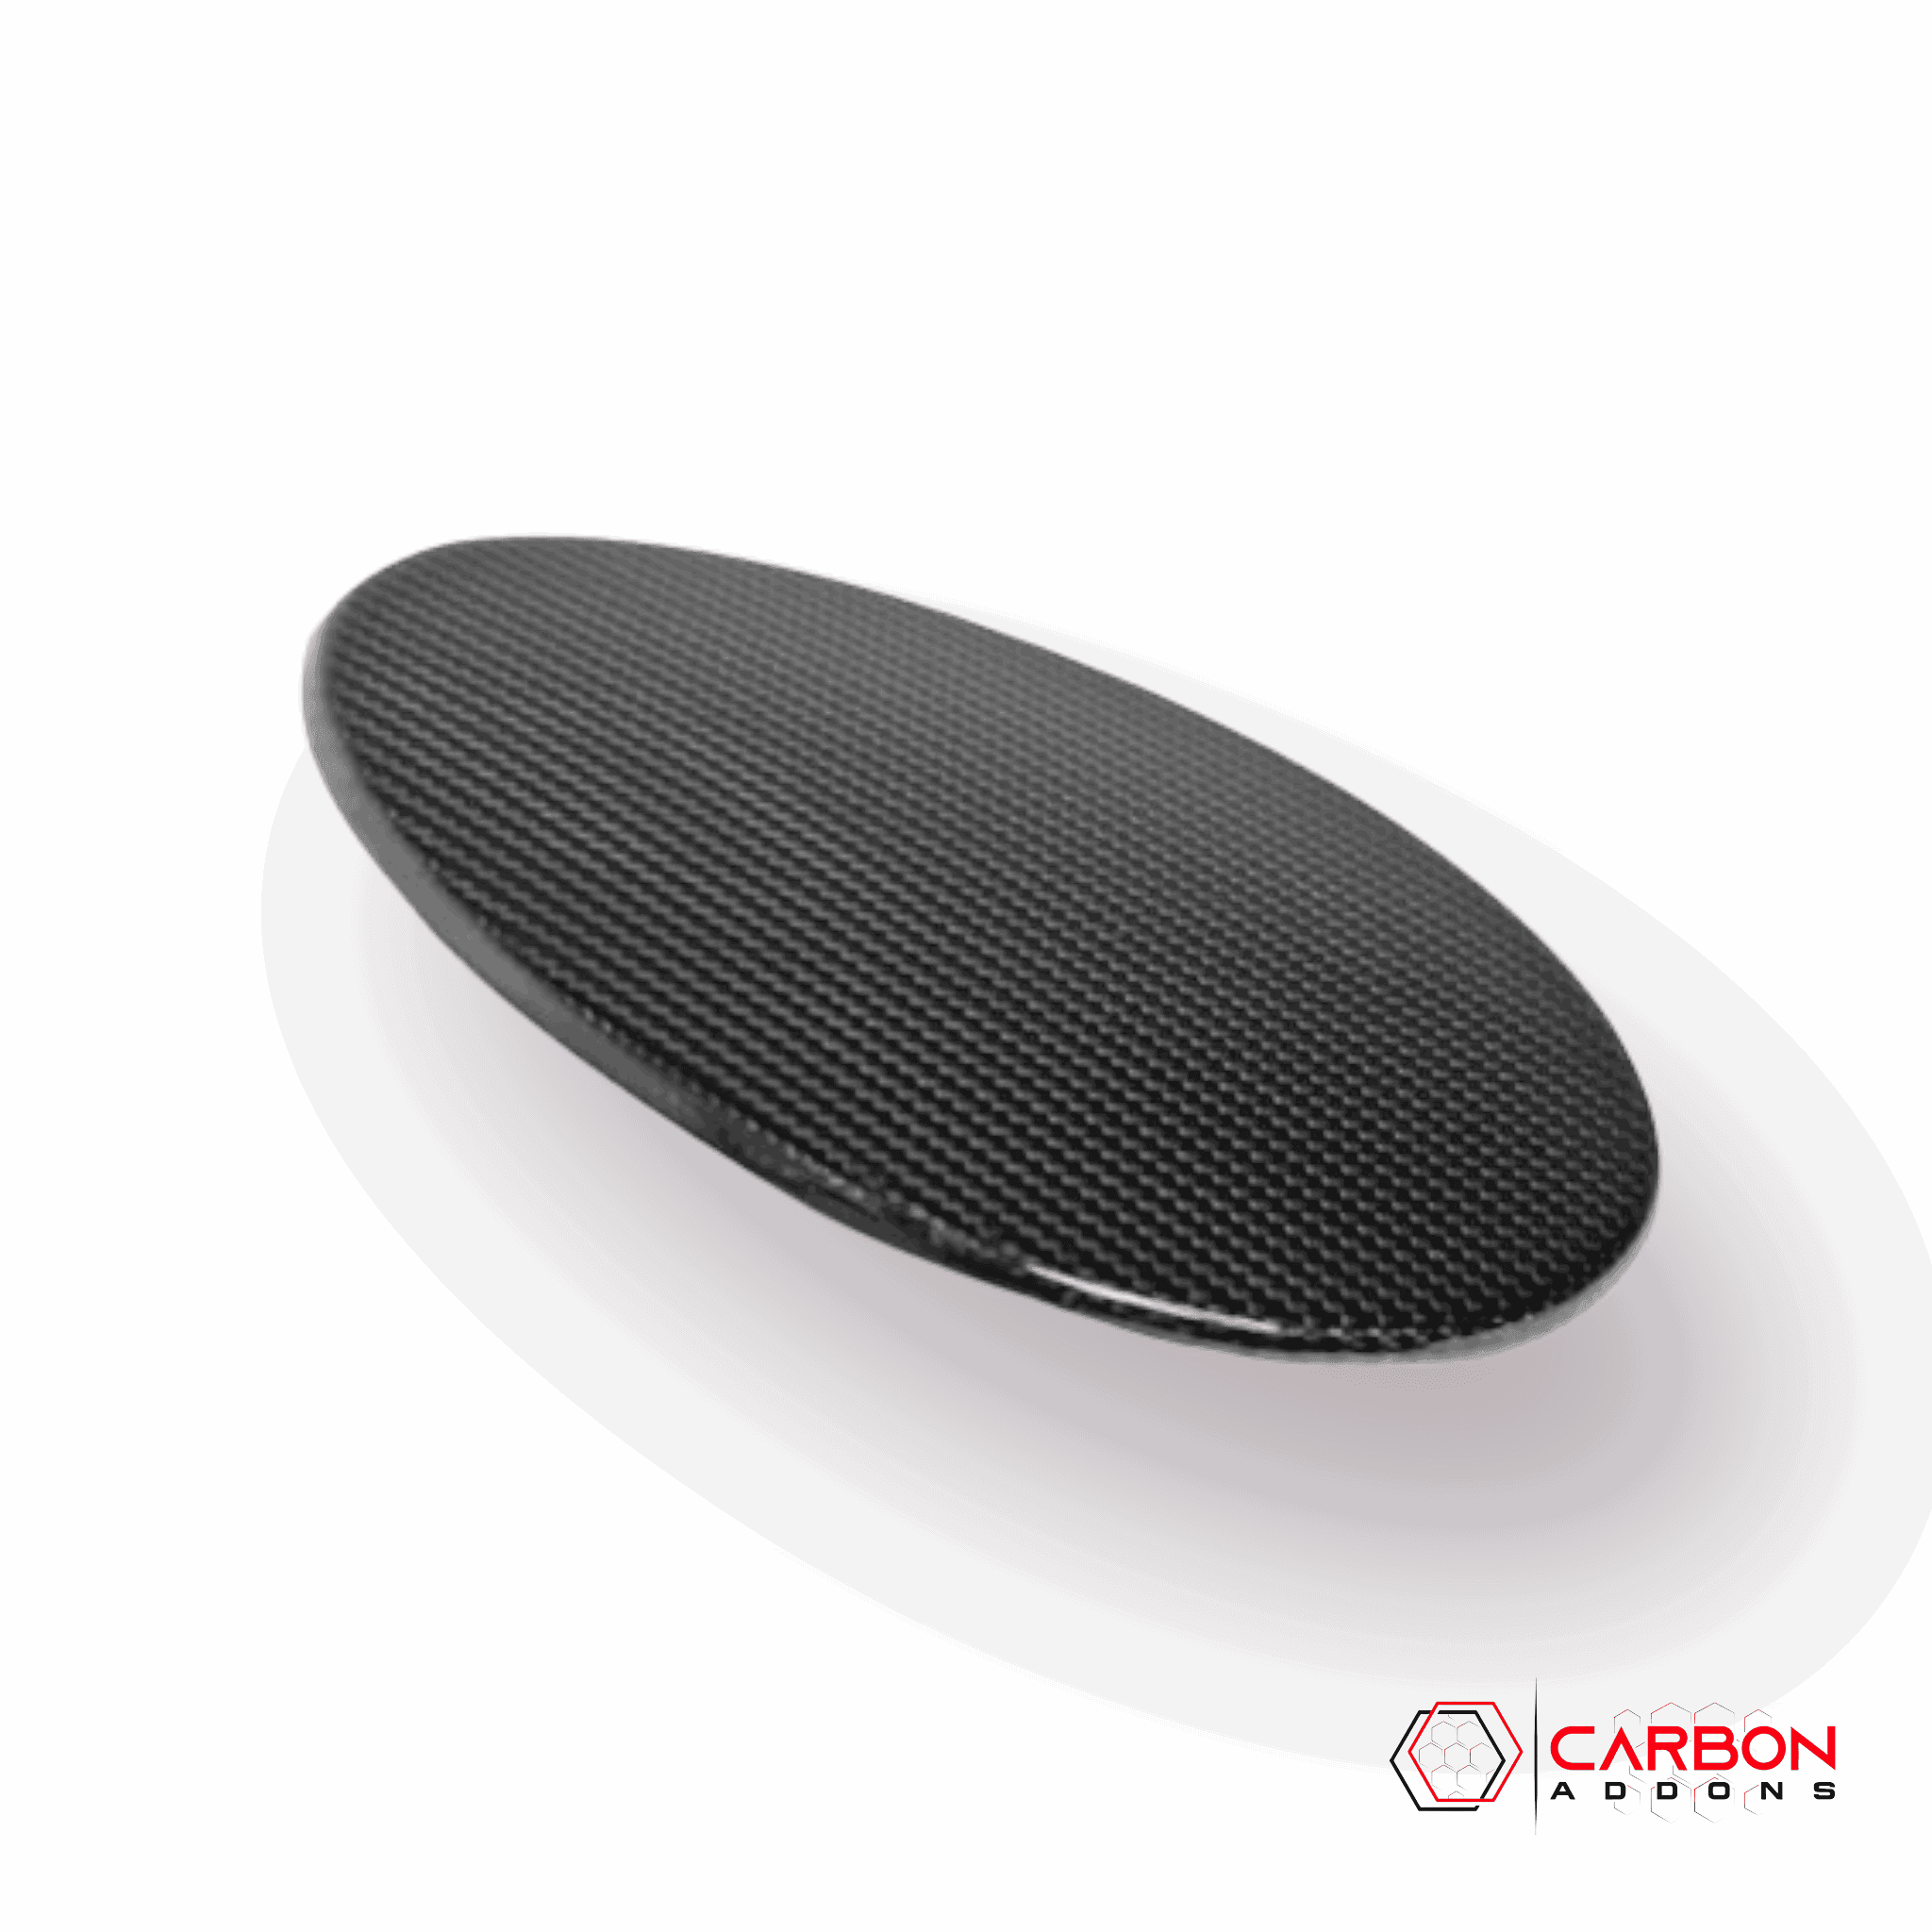 Exterior Carbon Fiber Gas Cap Cover for 2010-2015 Chevy Camaro - carbonaddons Carbon Fiber Parts, Accessories, Upgrades, Mods